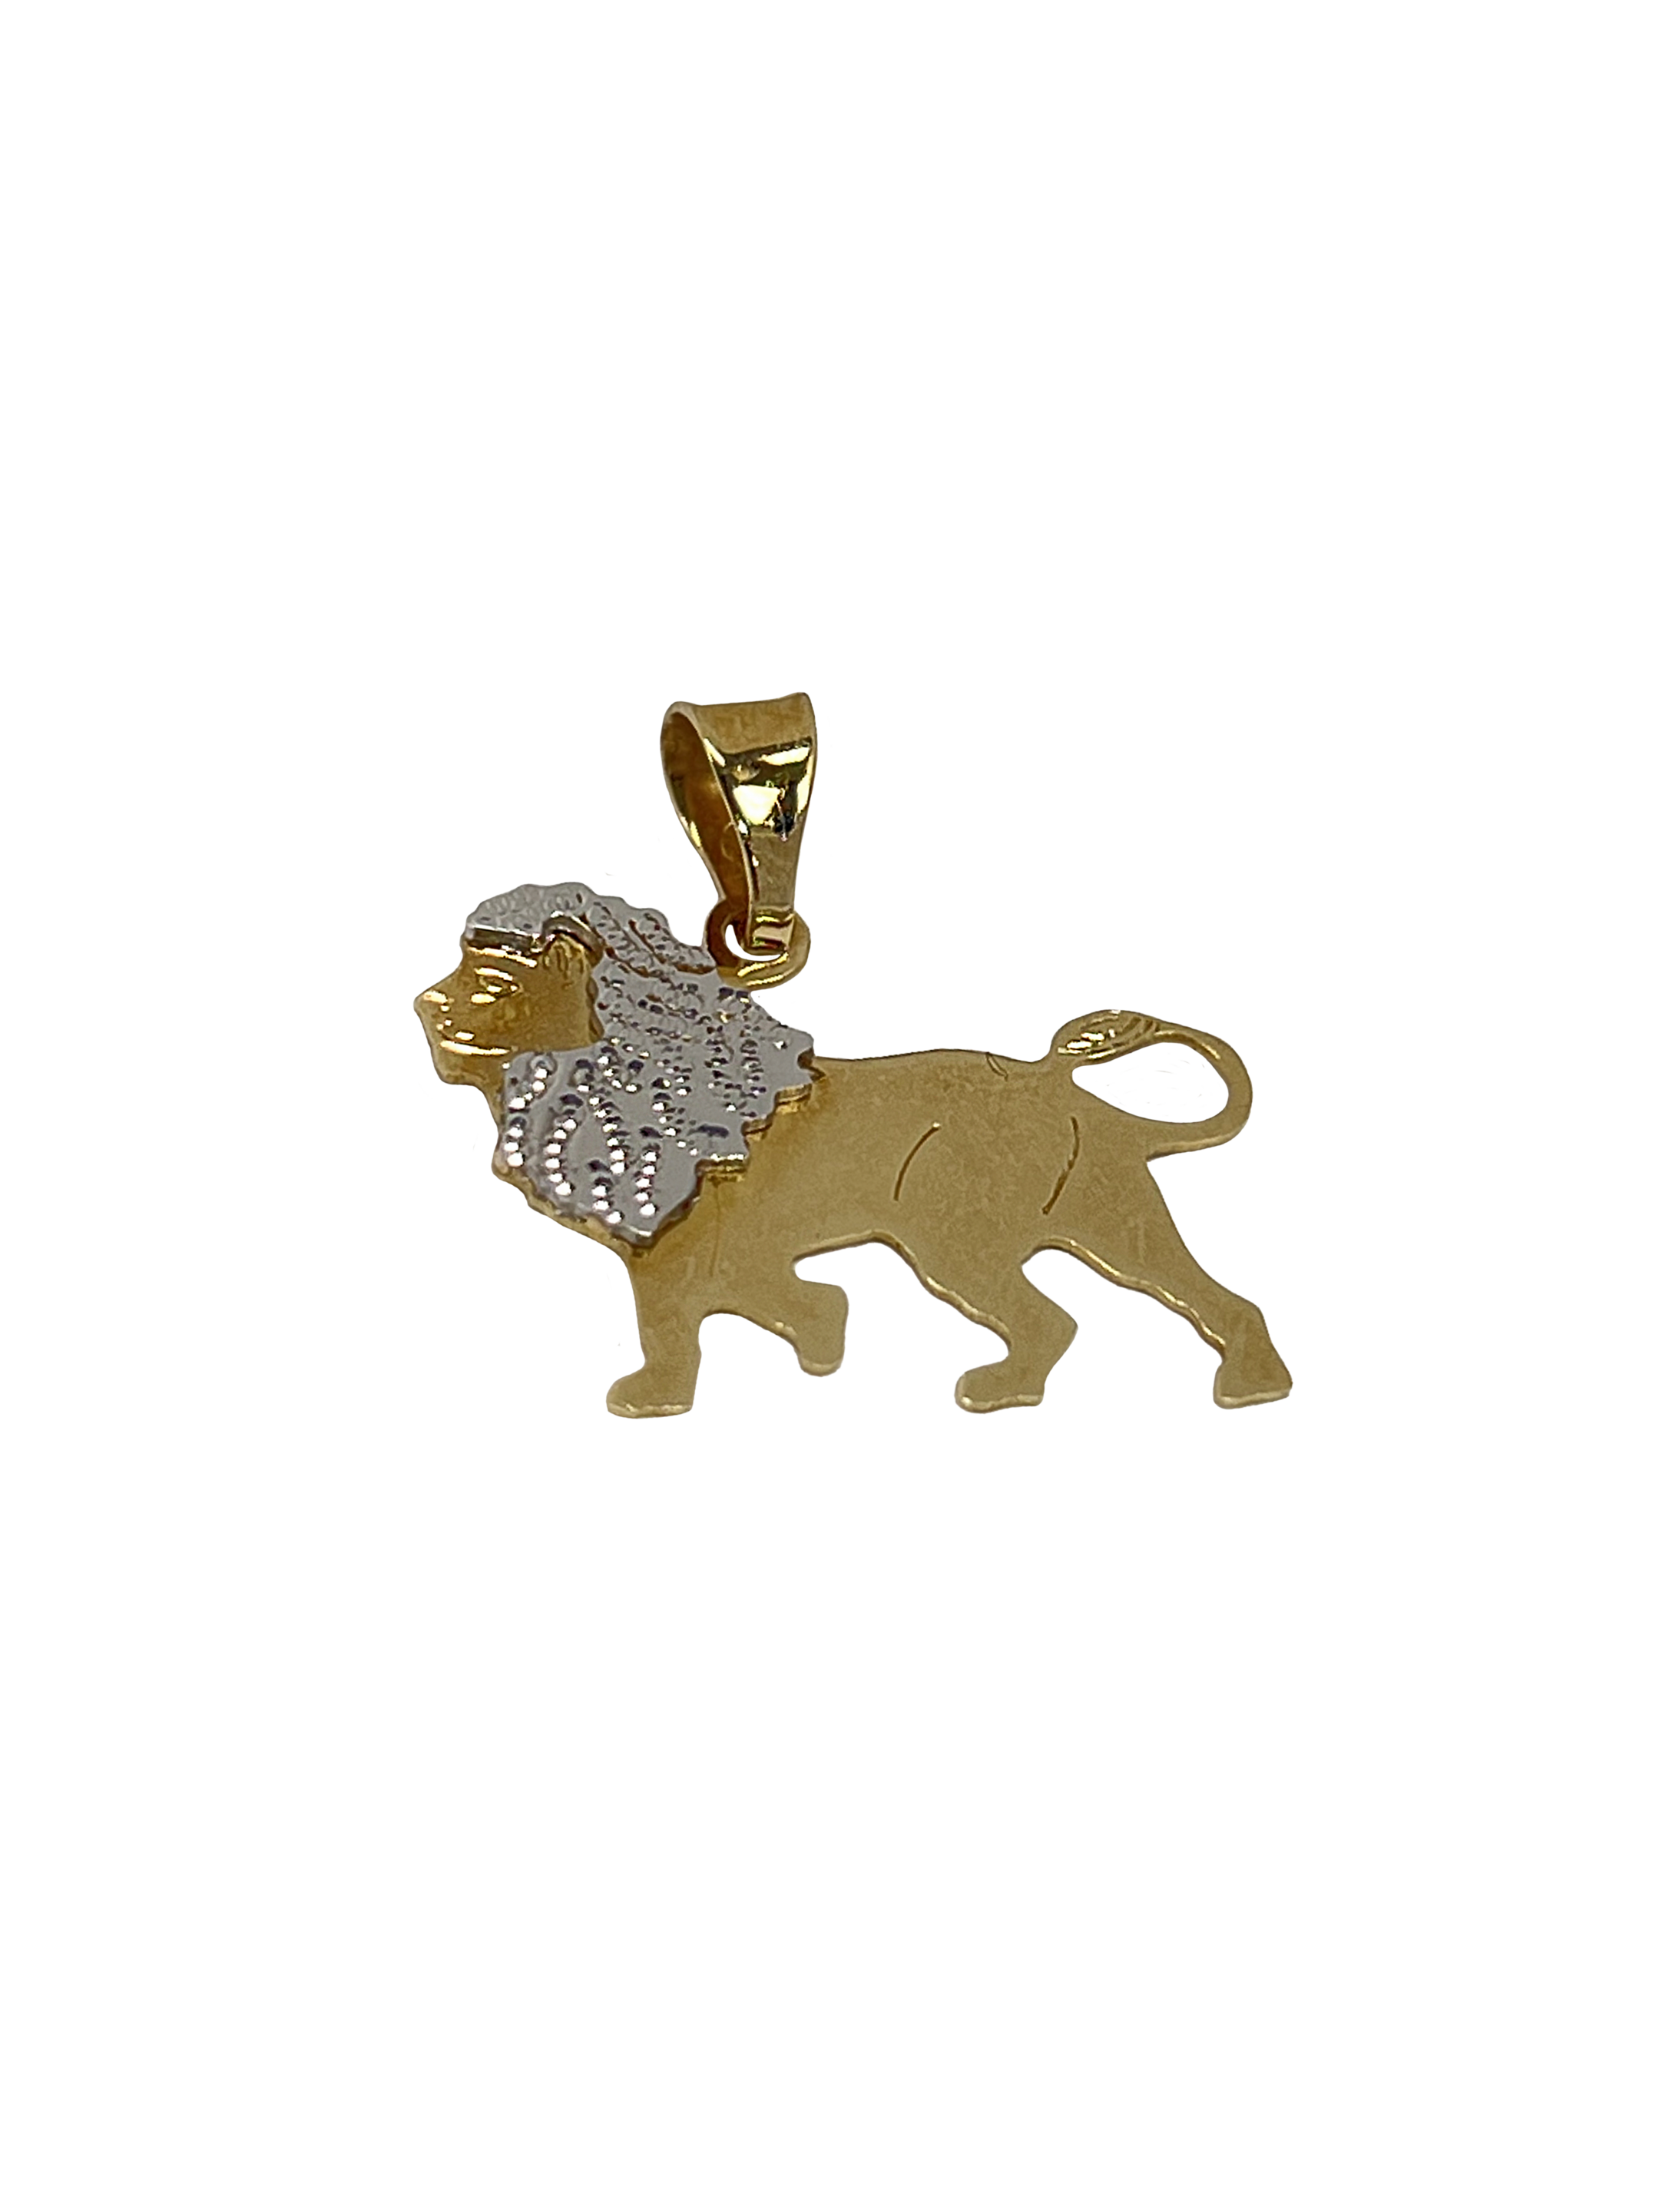 Auksinio derinio pakabuko ženklas liūtas